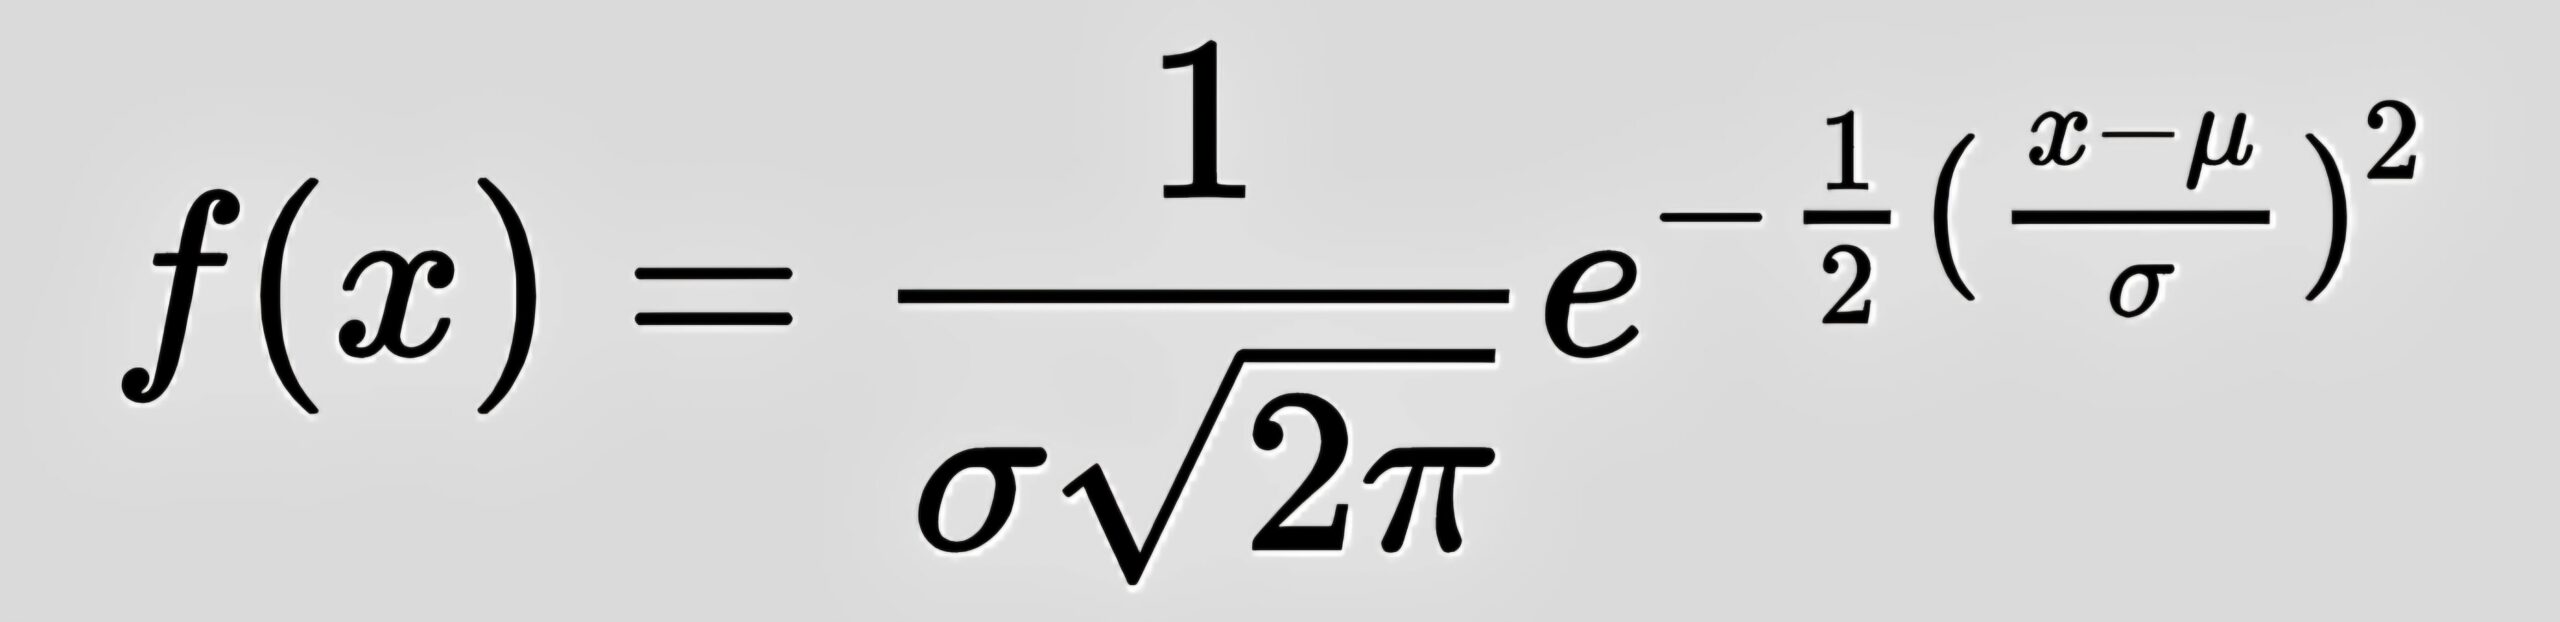 Formula for the normal distribution pdf